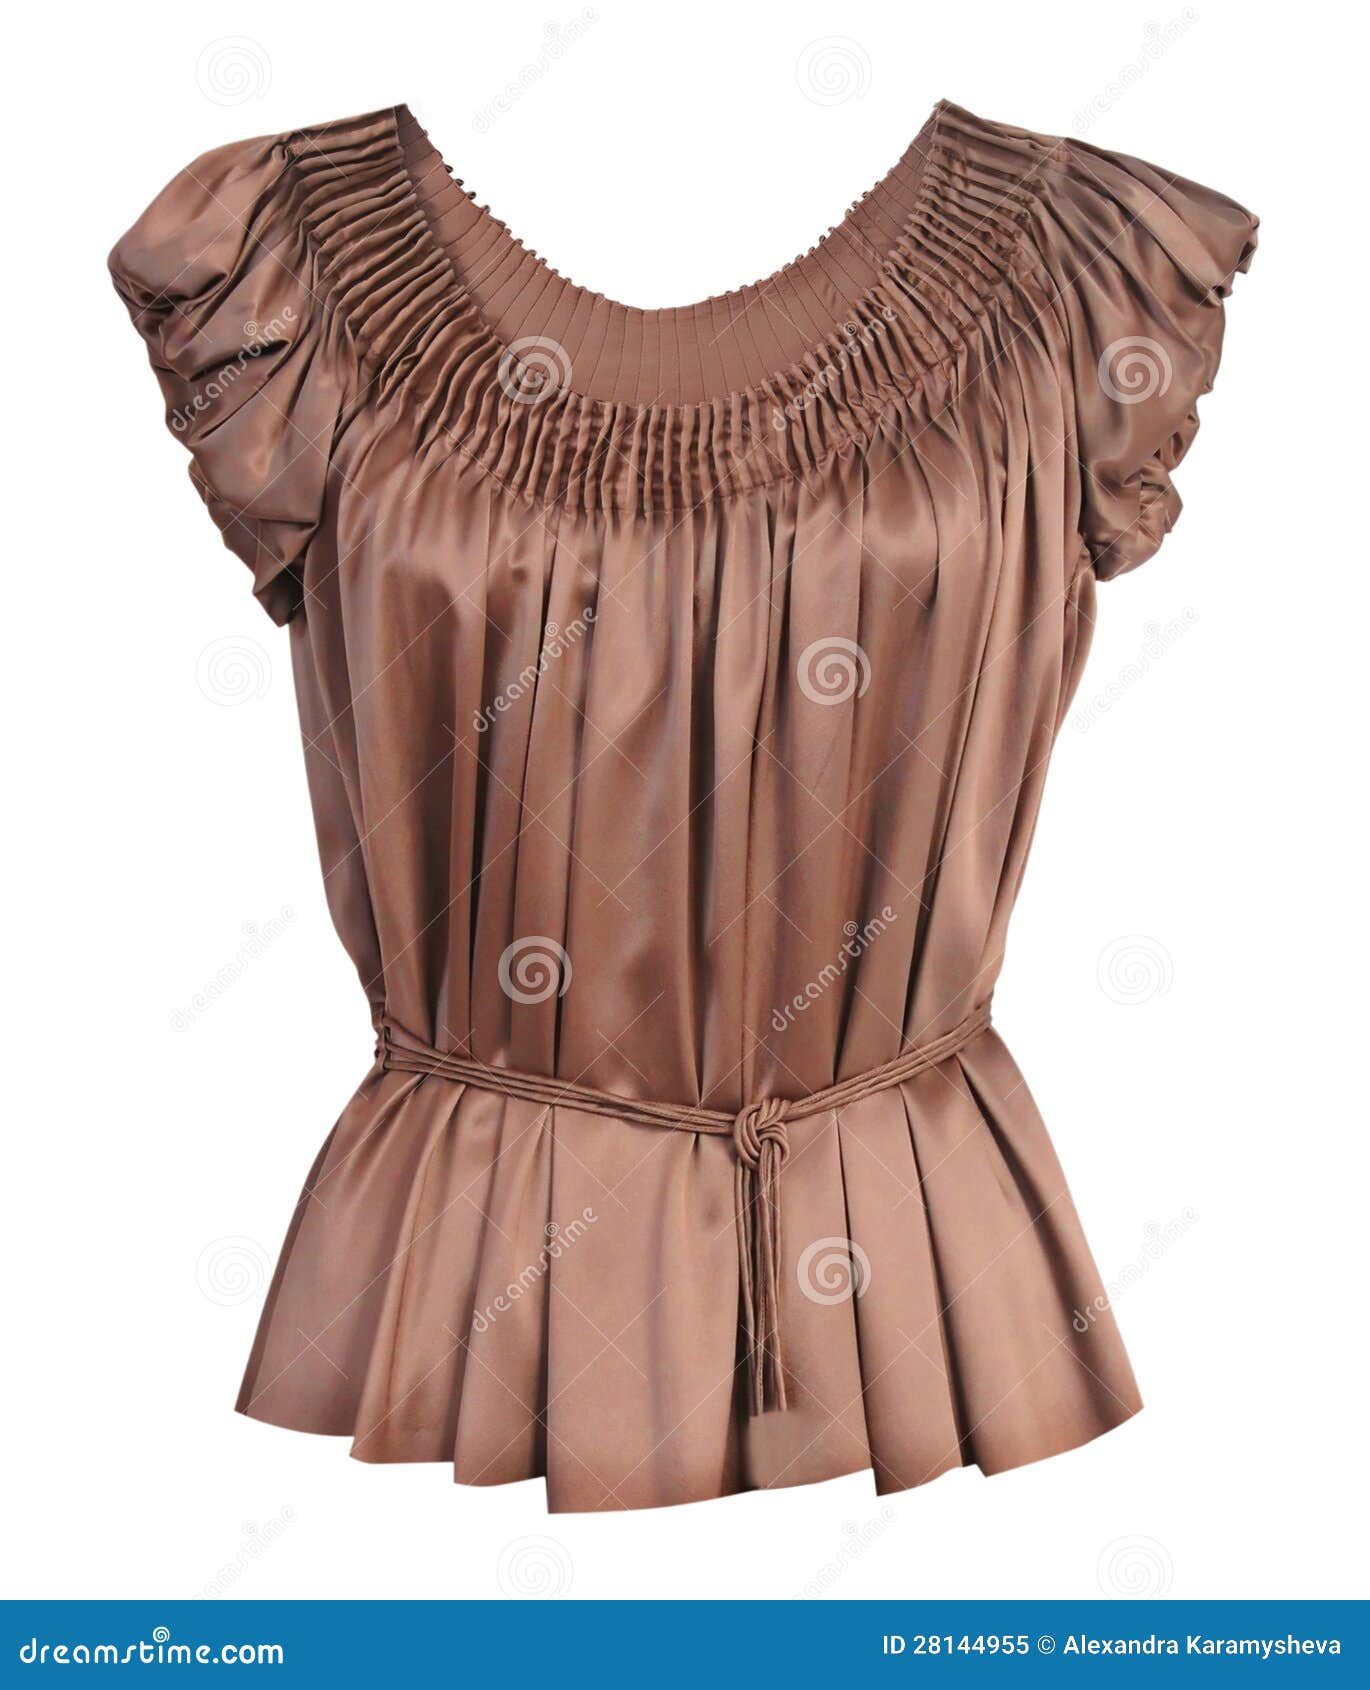 Women blouse stock image. Image of costume, design, raiment - 28144955